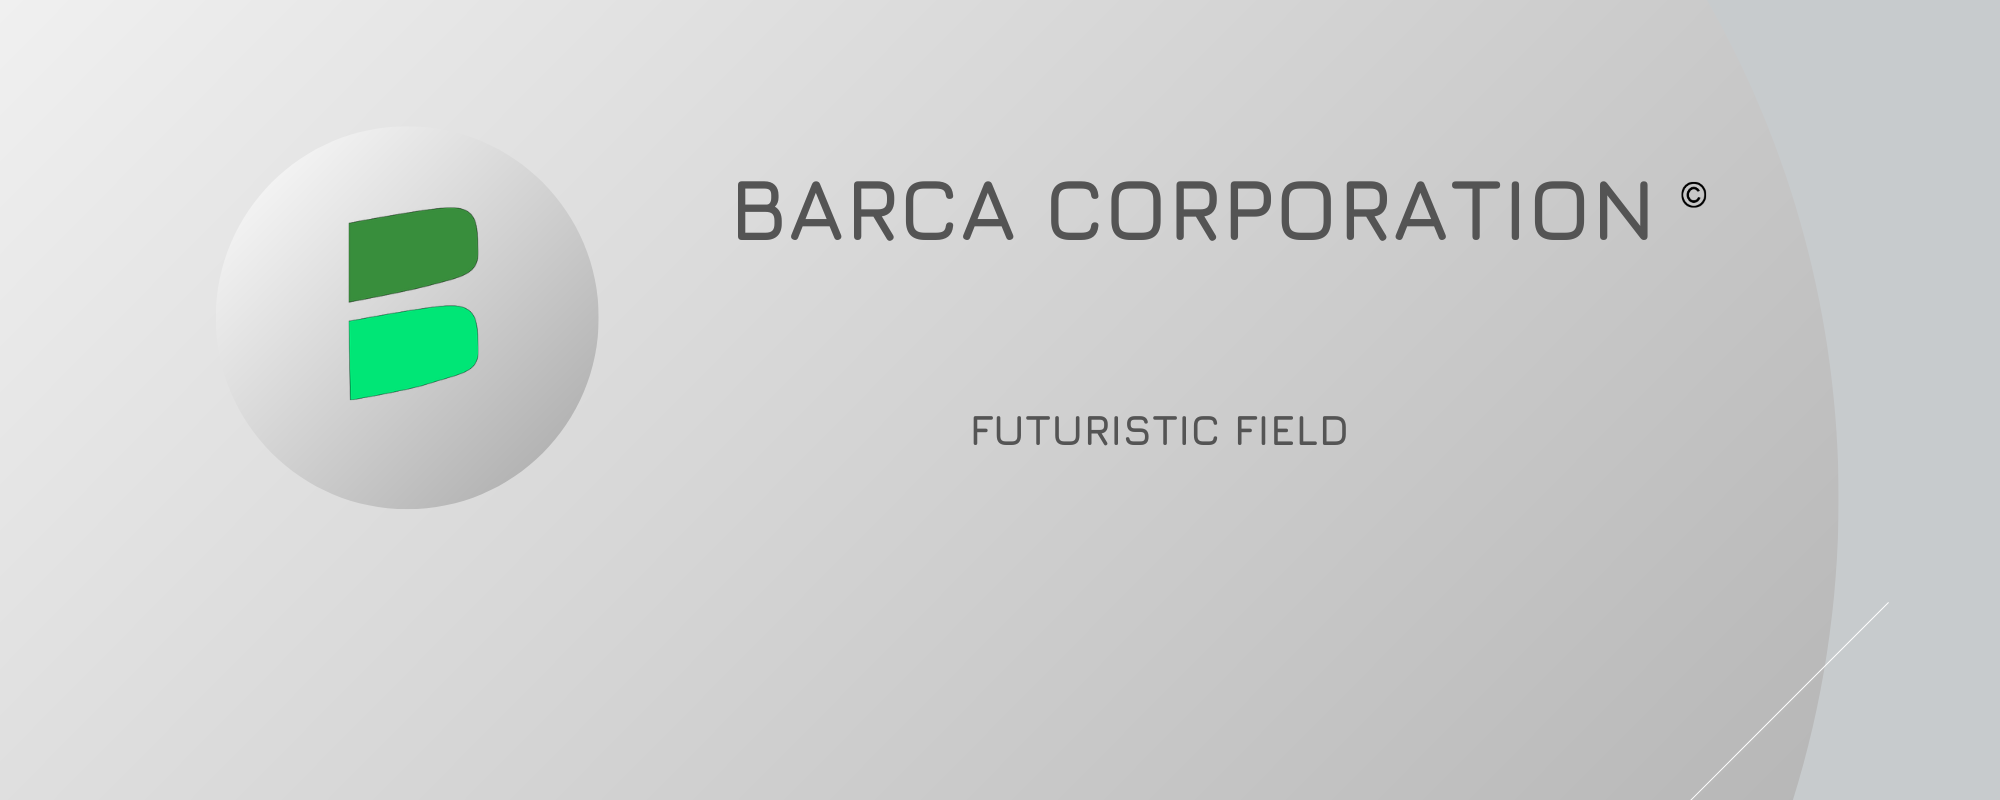 Barca Corporation